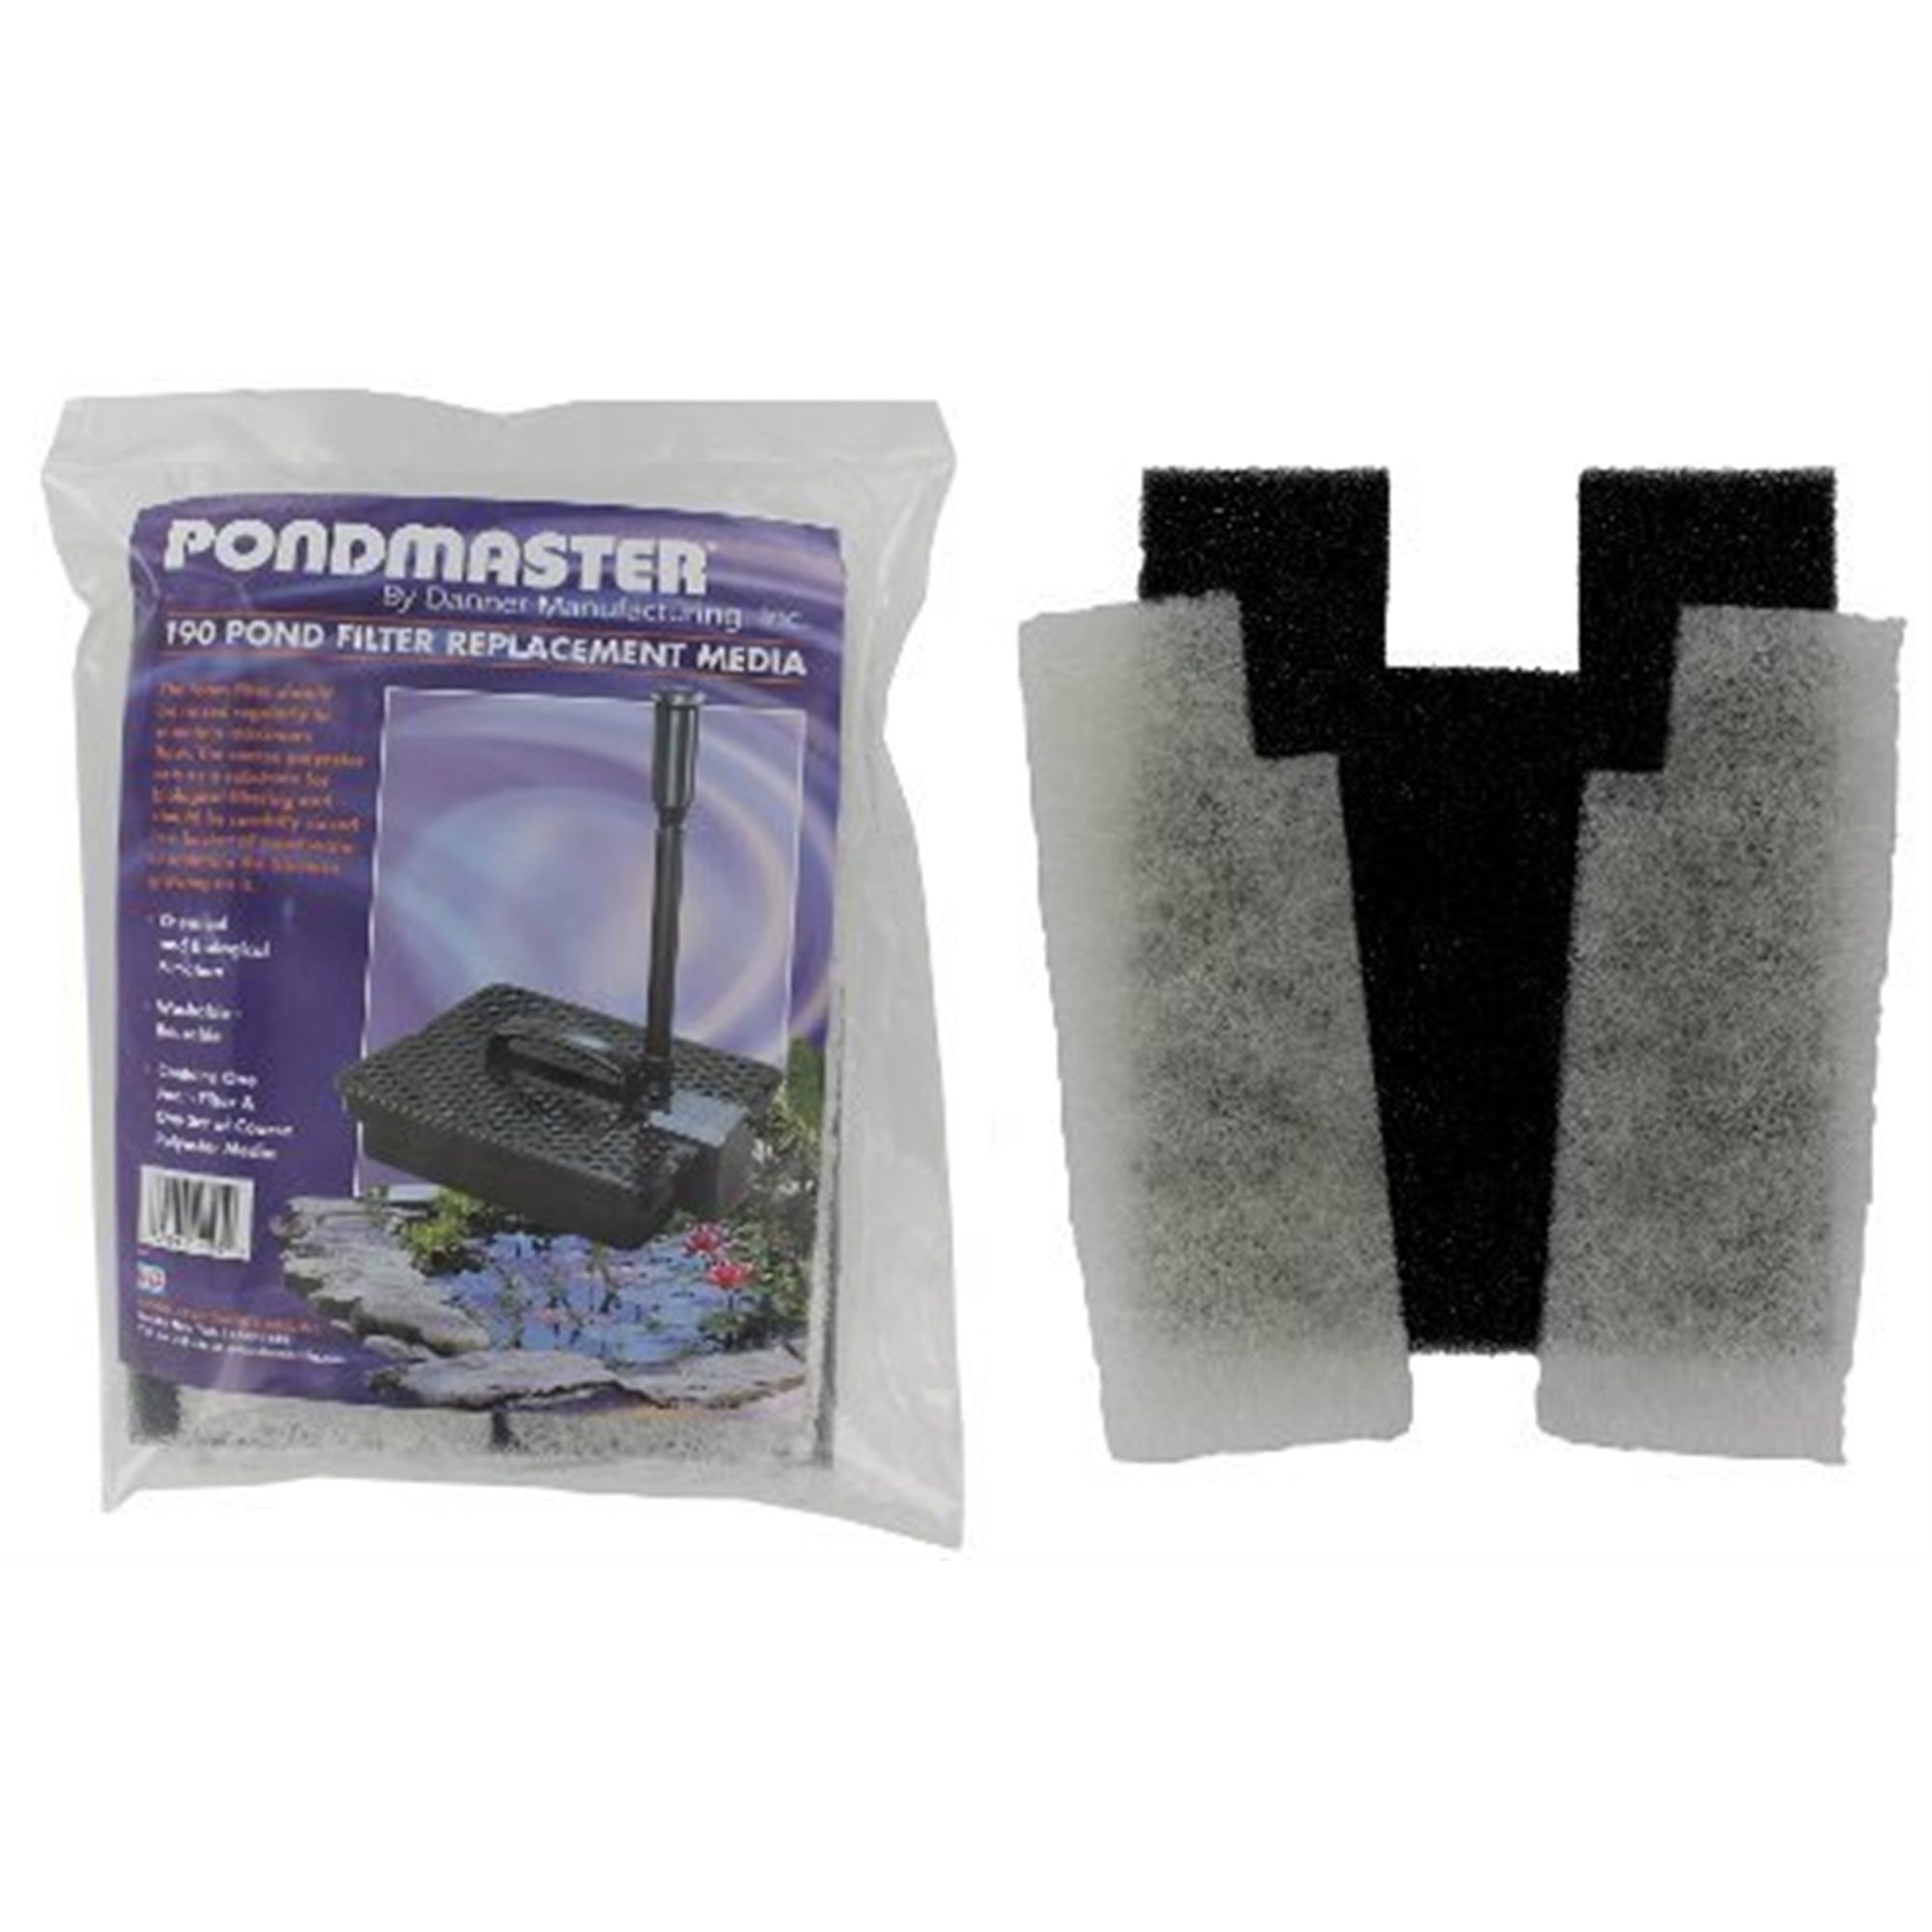 Danner Manufacturing Pondmaster Coarse Foam Pad Replacement Filter, #12195